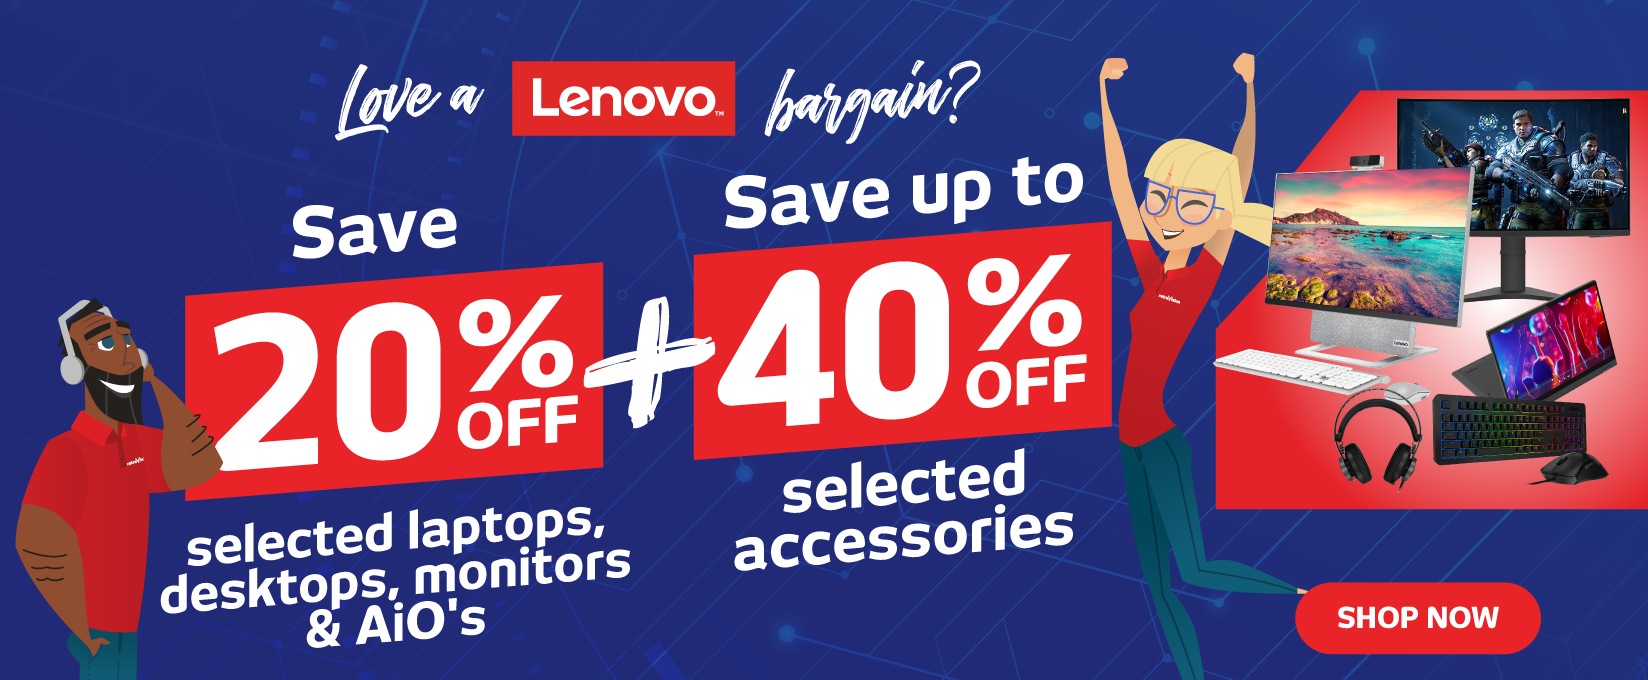 Love A Lenovo Bargain at Retravision